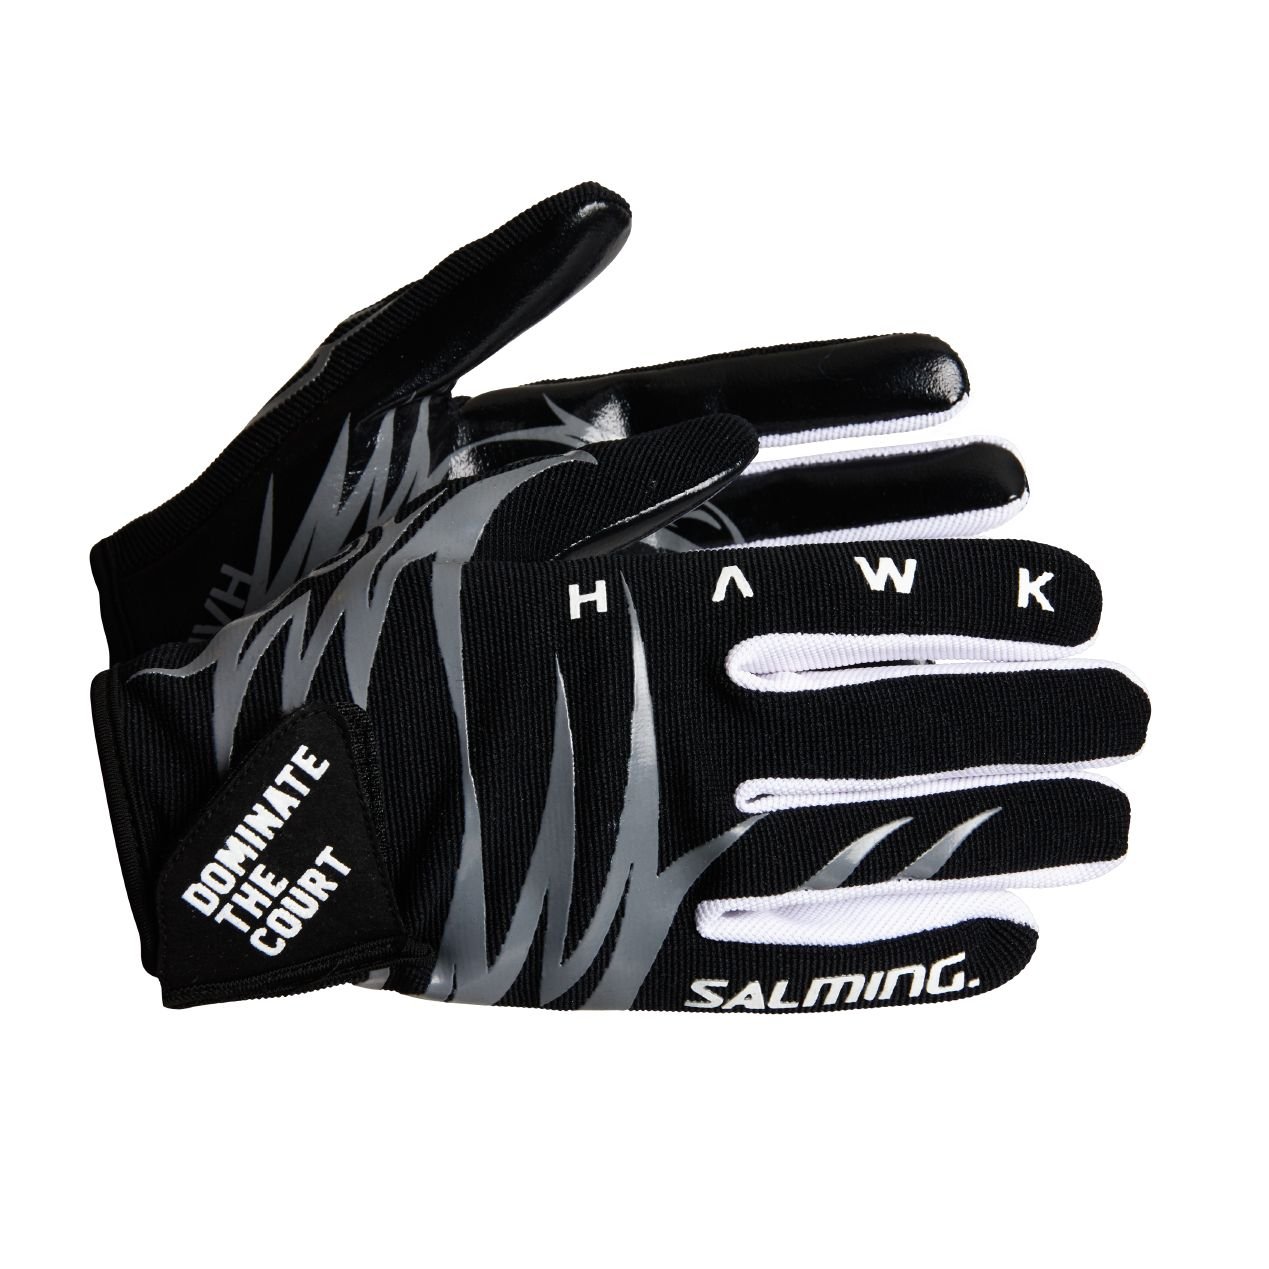 Salming Hawk Goalie Gloves XS